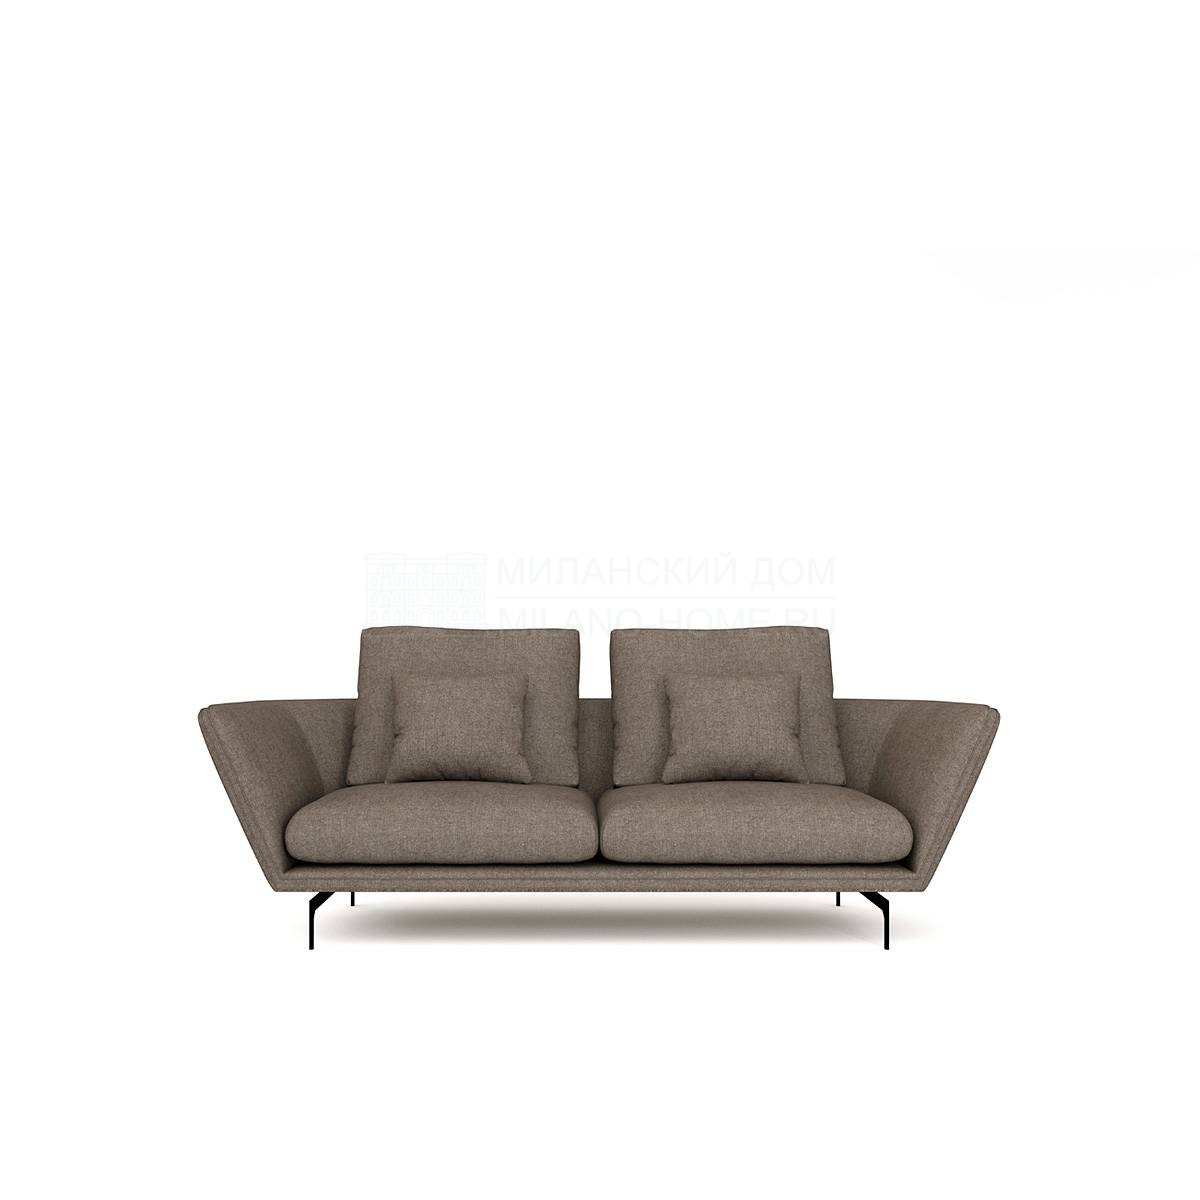 Прямой диван Disc sofa из Испании фабрики COLECCION ALEXANDRA